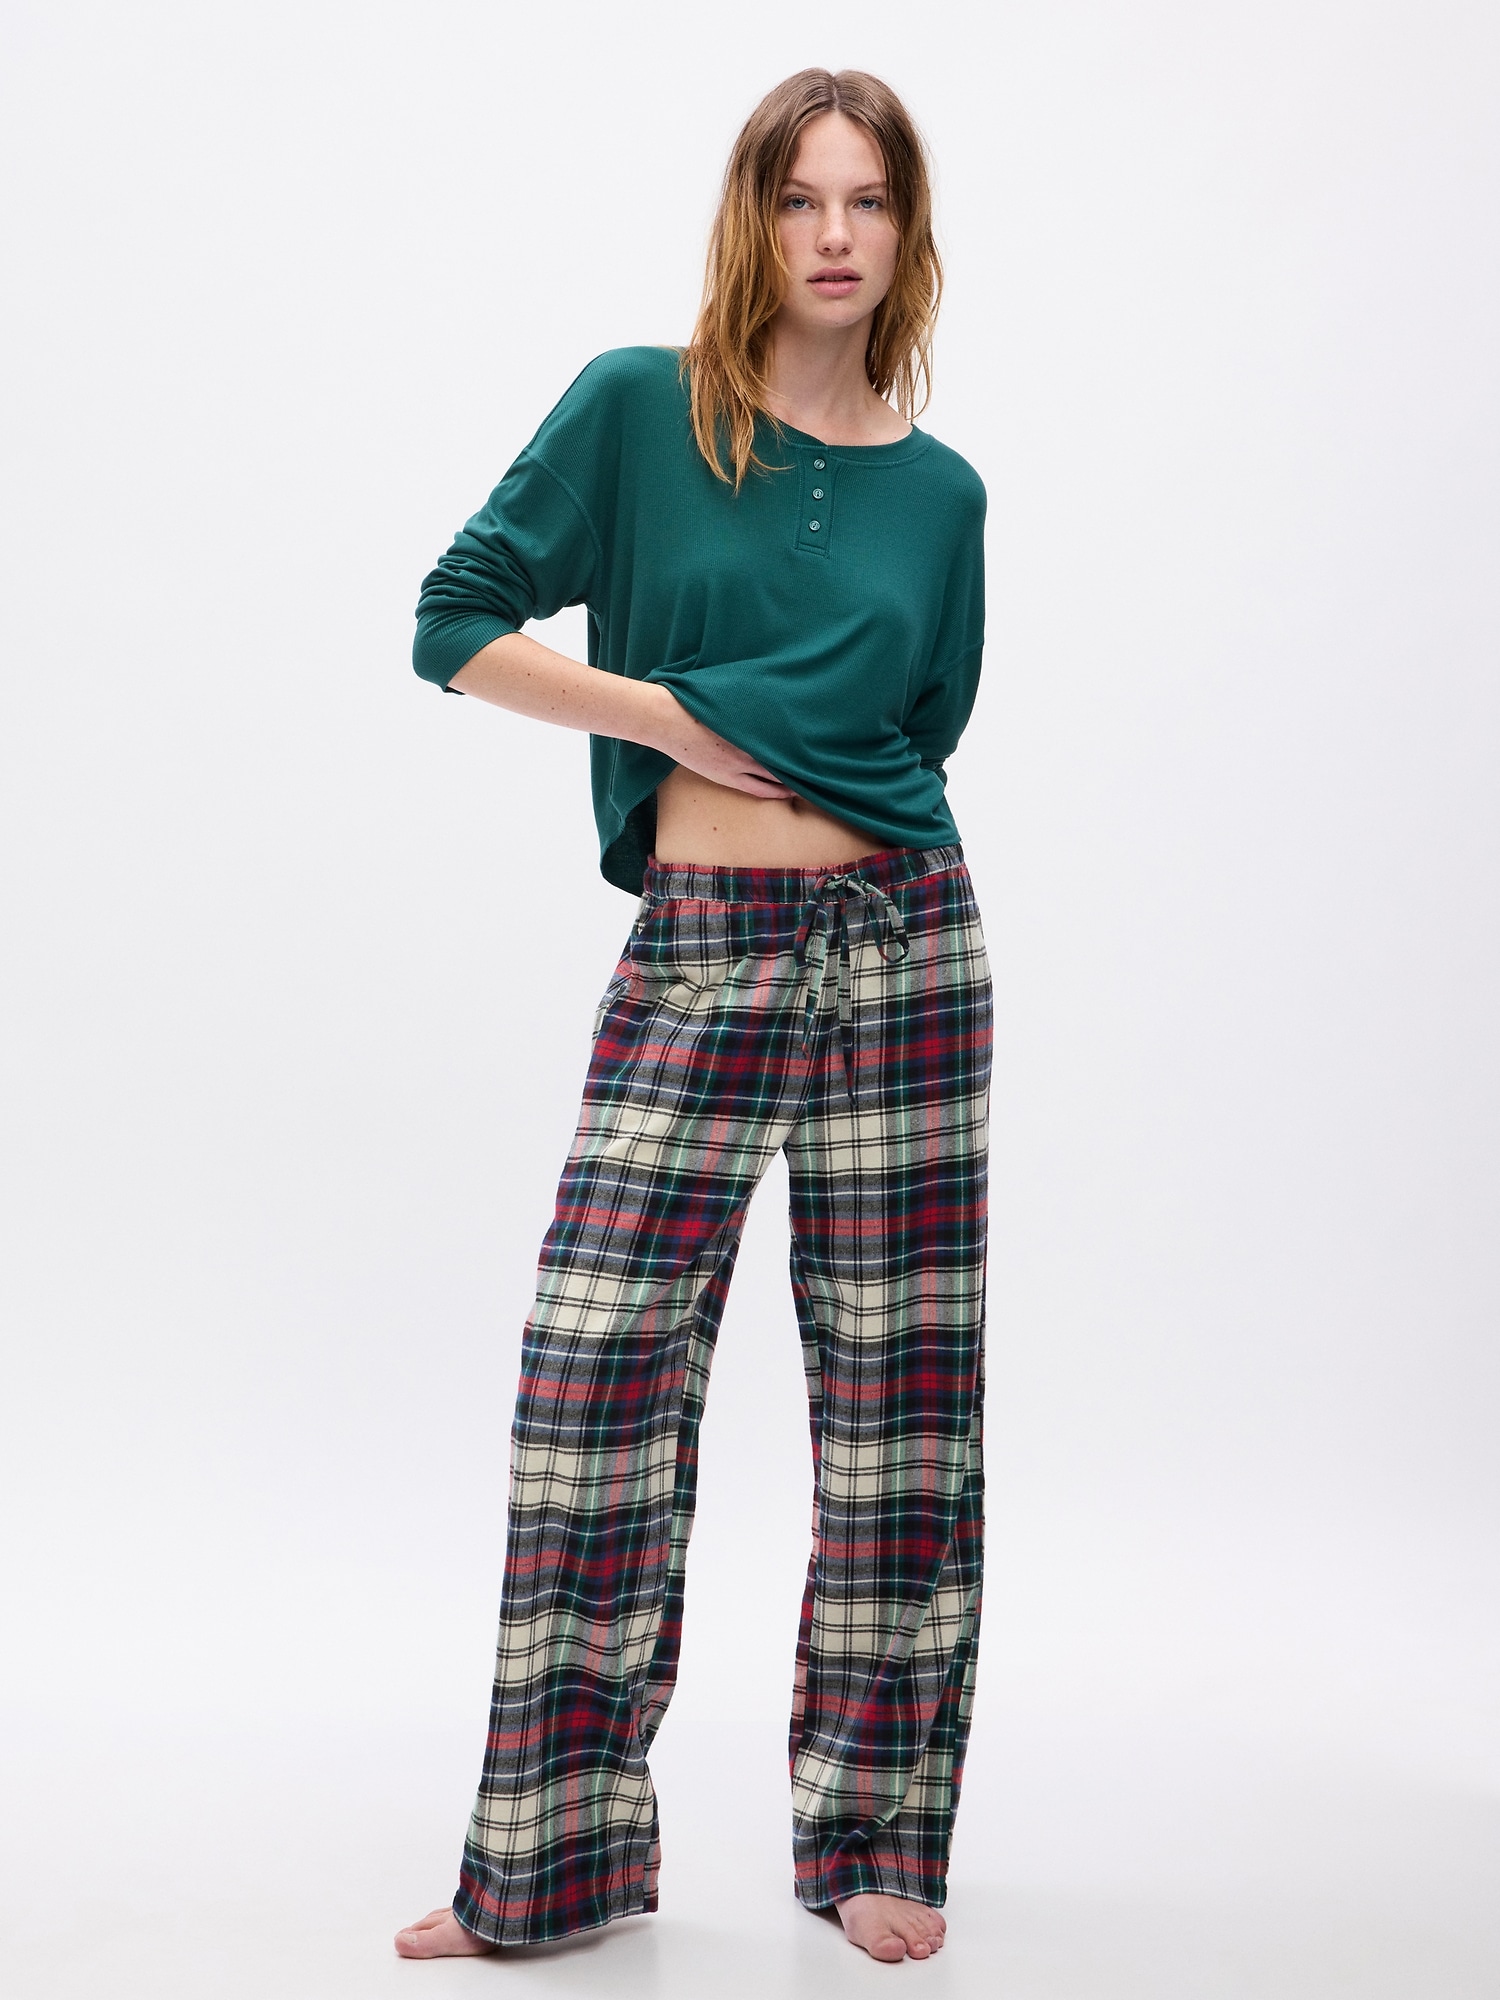 Women Plaid Pajama Pants Sleepwear, Women Lounge Pants Comfy Best